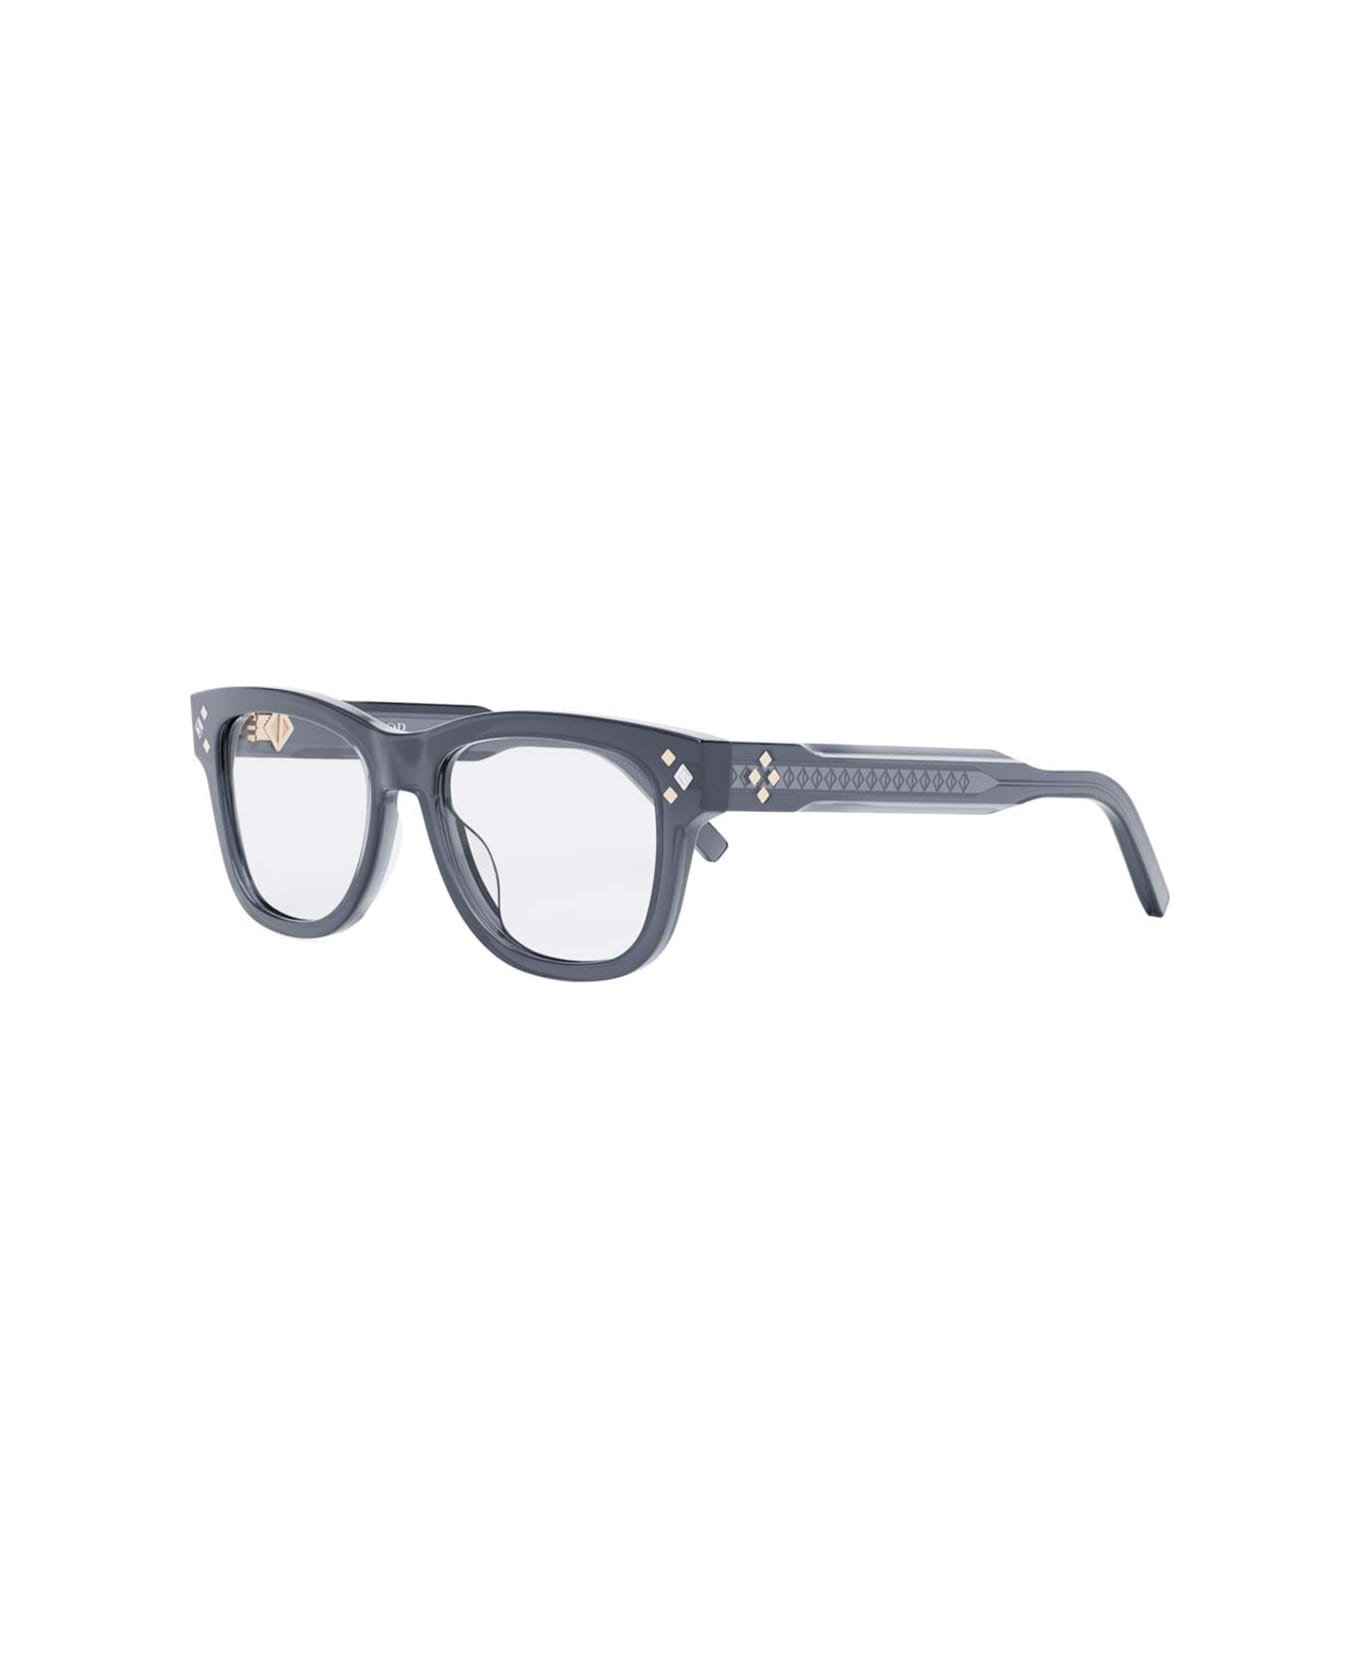 Dior Eyewear Glasses - Blu アイウェア